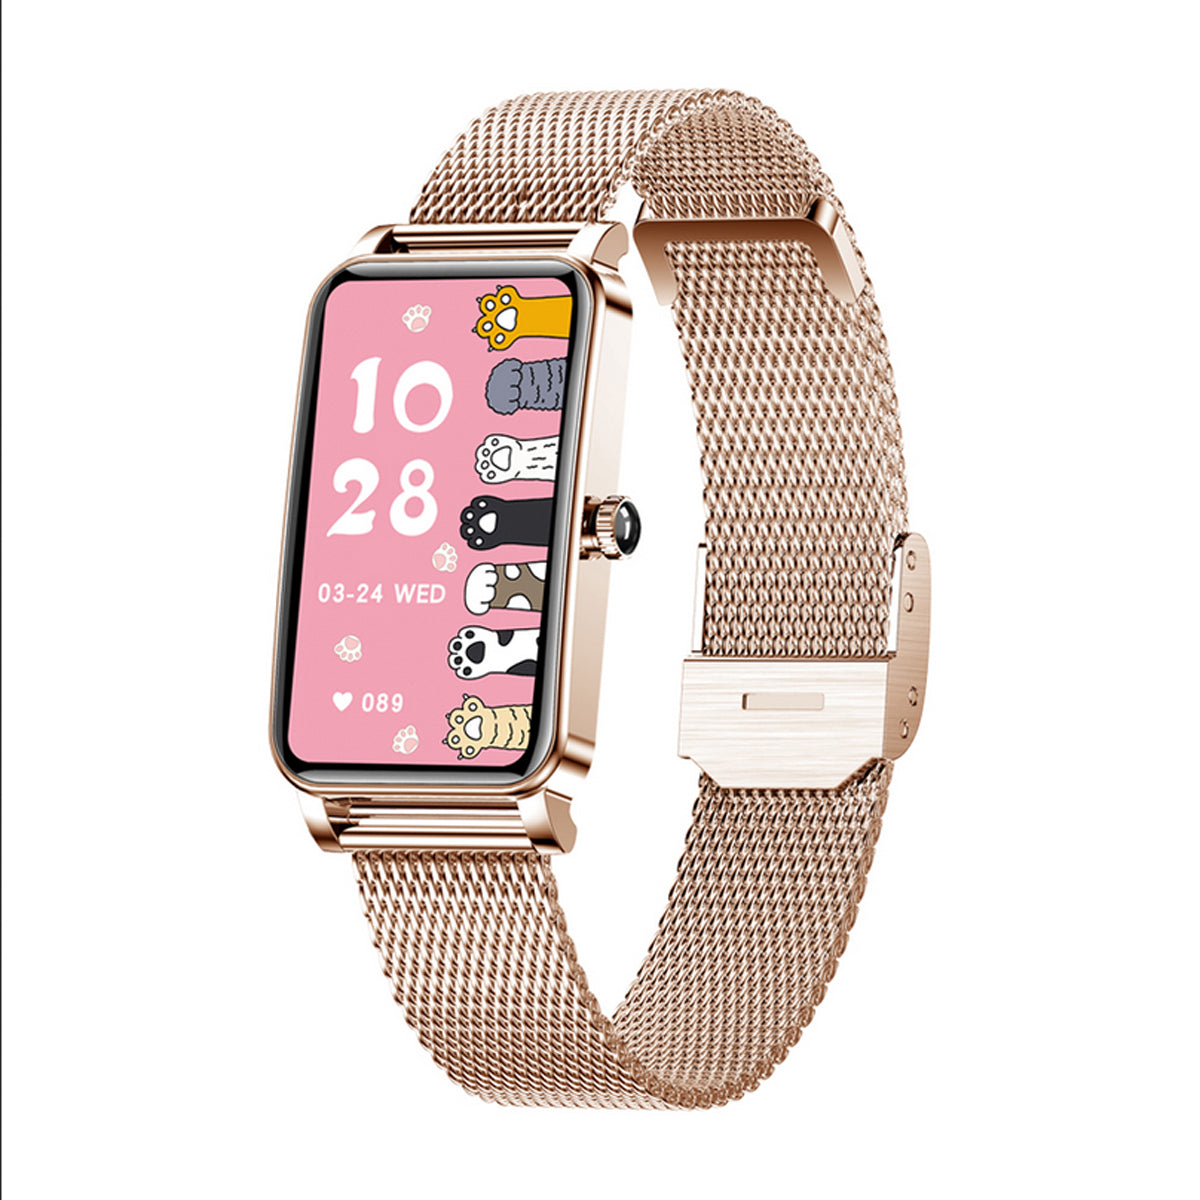 TPFNet Damen Smart Watch / Fitness Tracker IP68 - Milanaise Armband - Android & IOS - verschiedene Farben